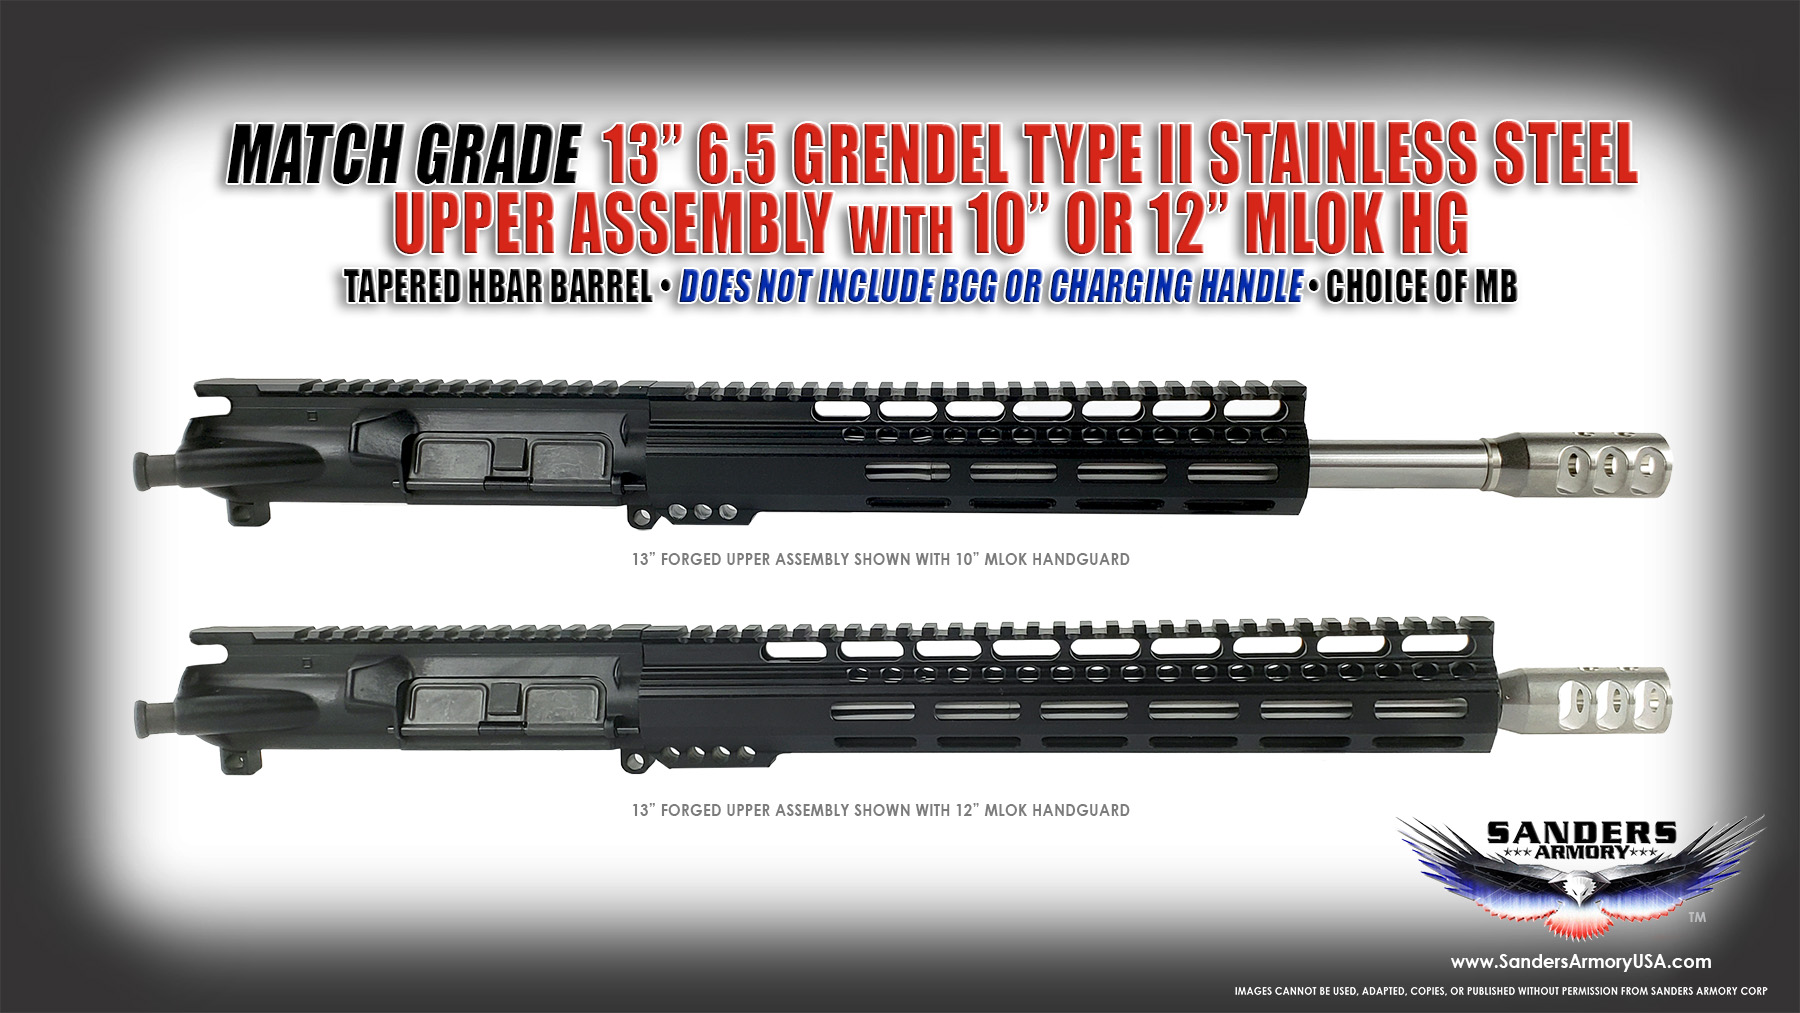 Sanders Armory match grade 13” 6.5 Grendel Type II Stainless steelupper assembly with 10 or 12 MLOK HG